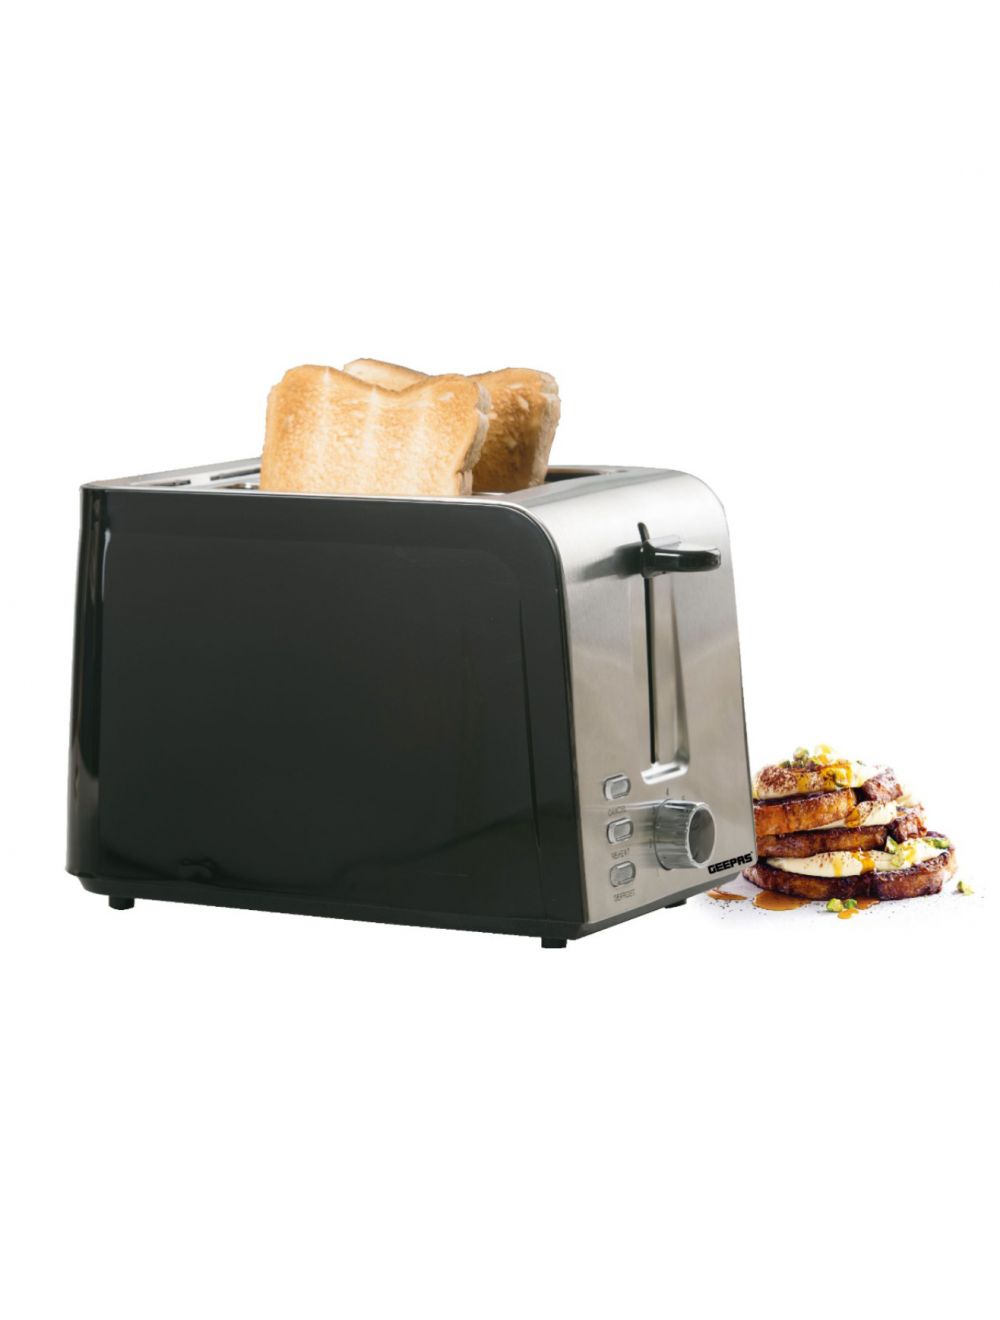 Geepas 2-Slice Bread Toaster 850W GBT36513UK Silver